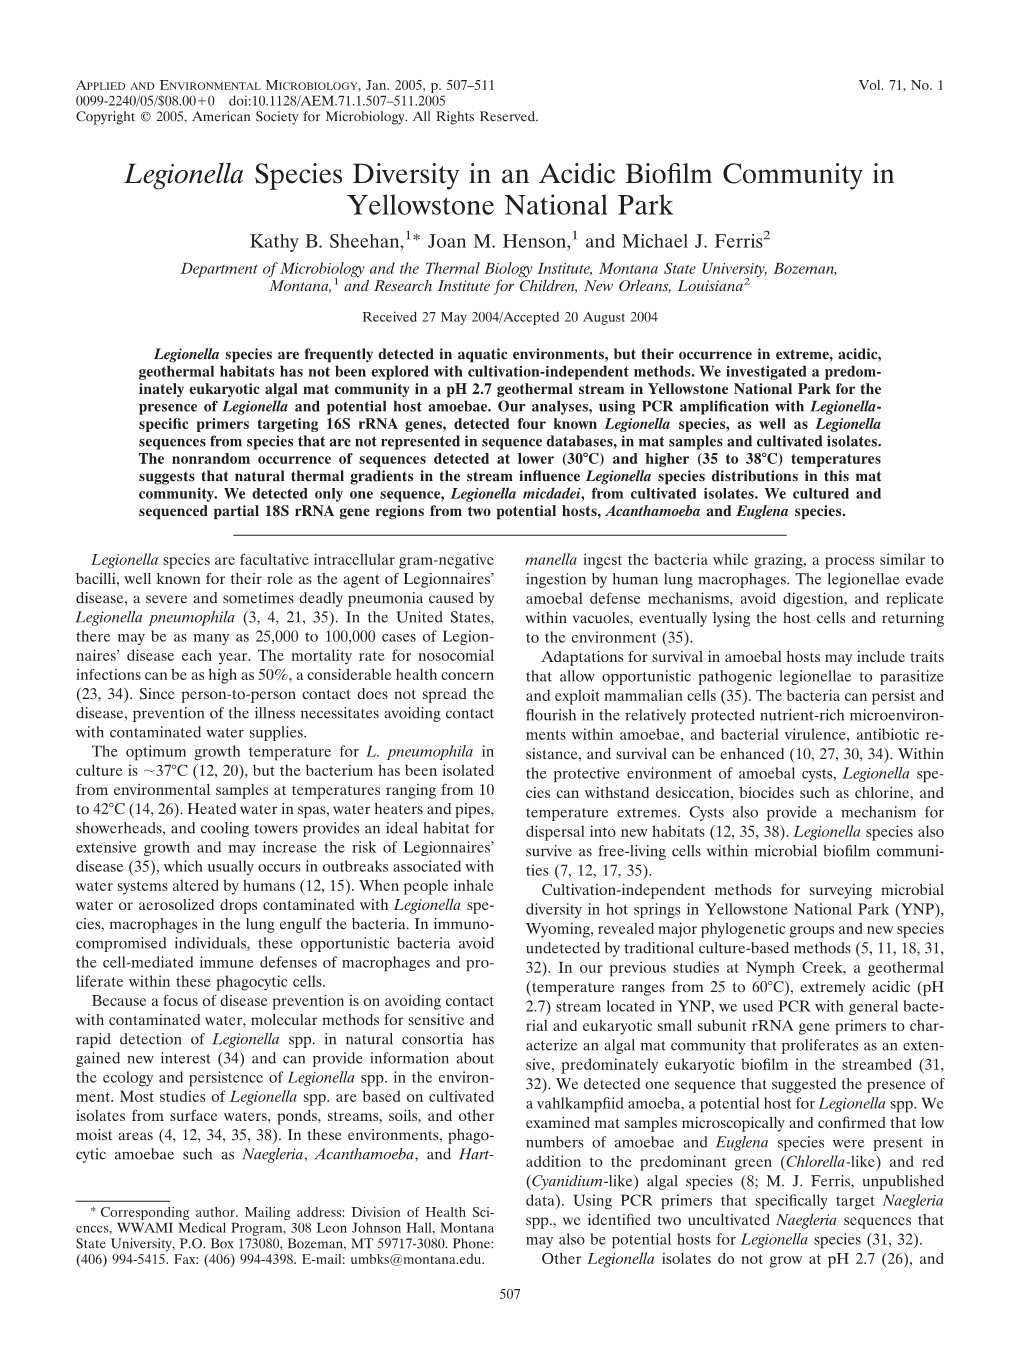 Legionella Species Diversity in an Acidic Bioﬁlm Community in Yellowstone National Park Kathy B